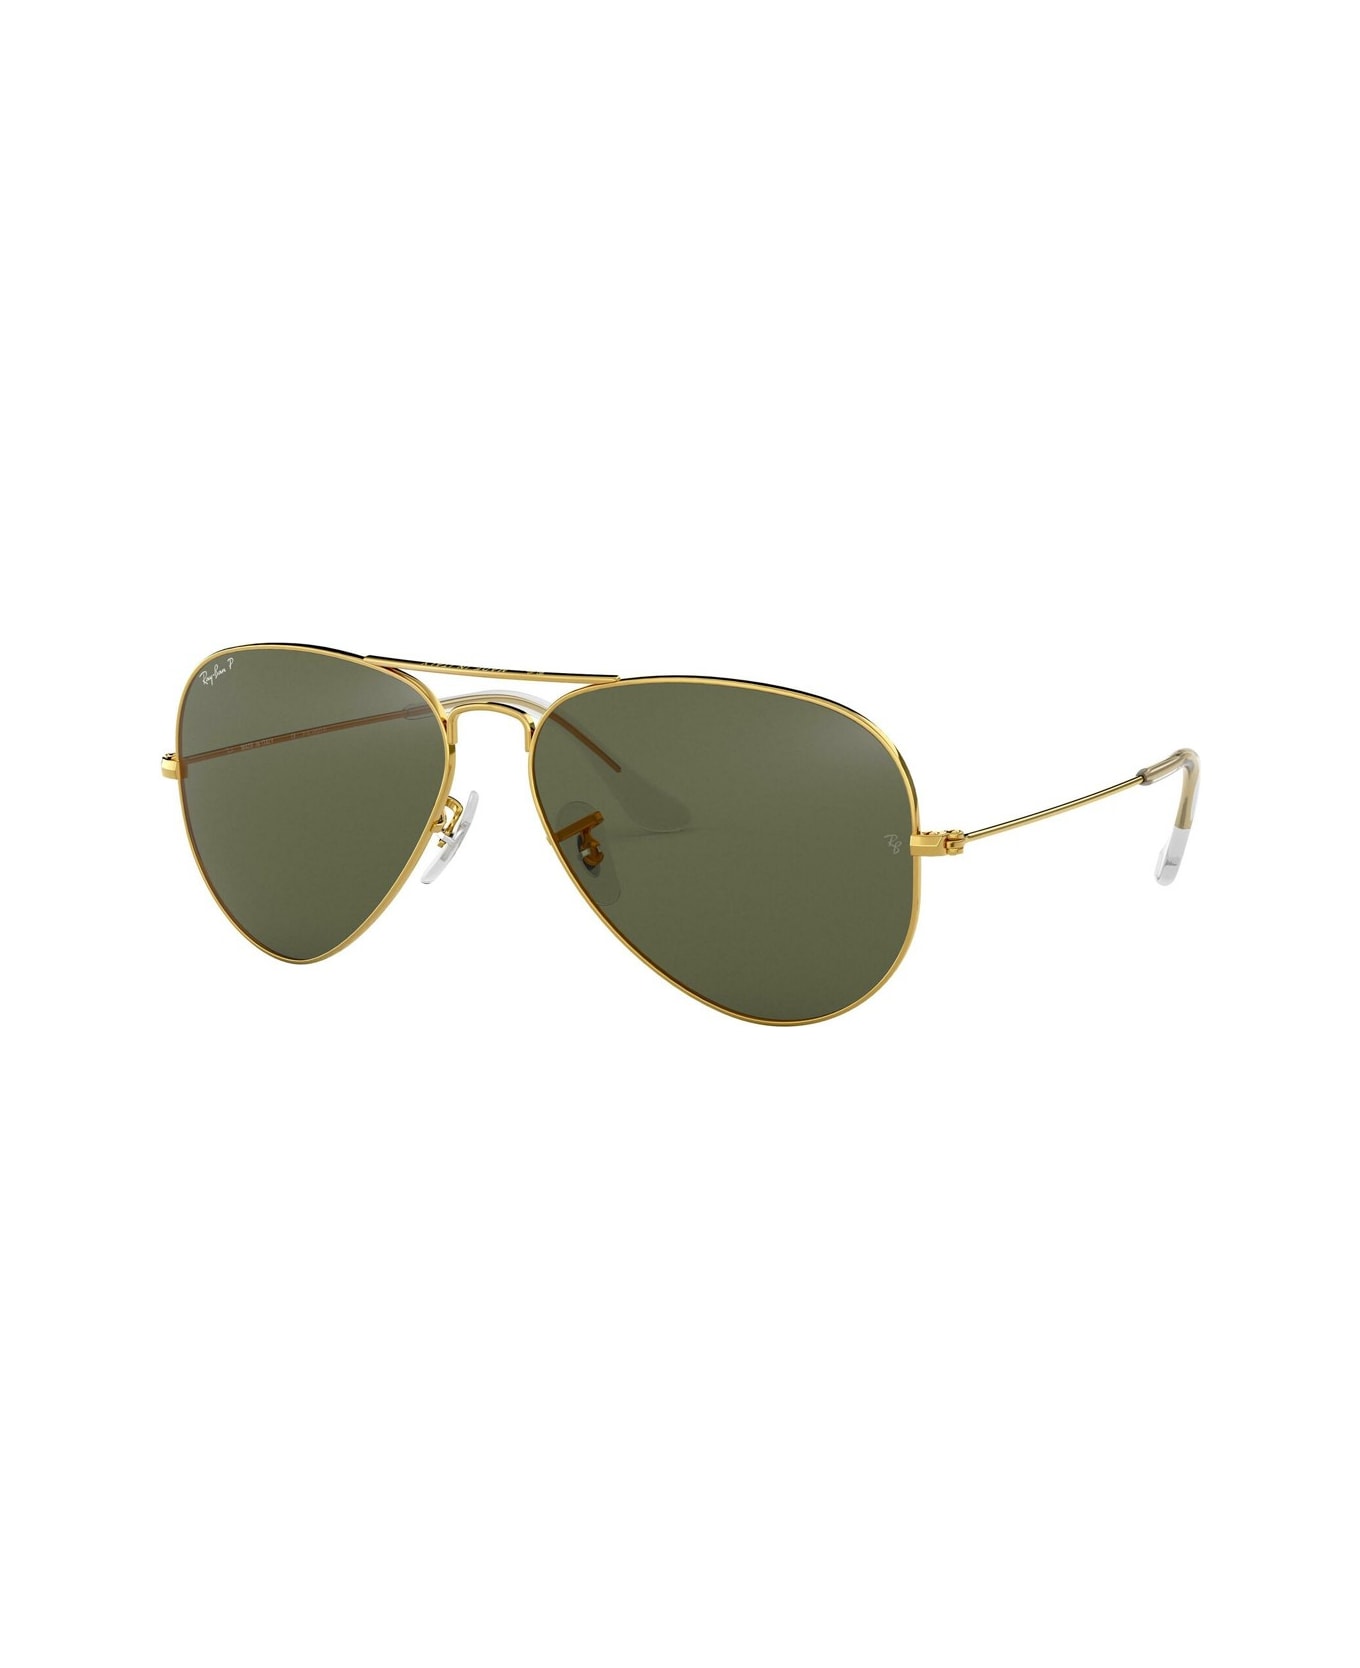 Ray-Ban Aviator Rb 3025 Polarizzato Sunglasses - Oro サングラス